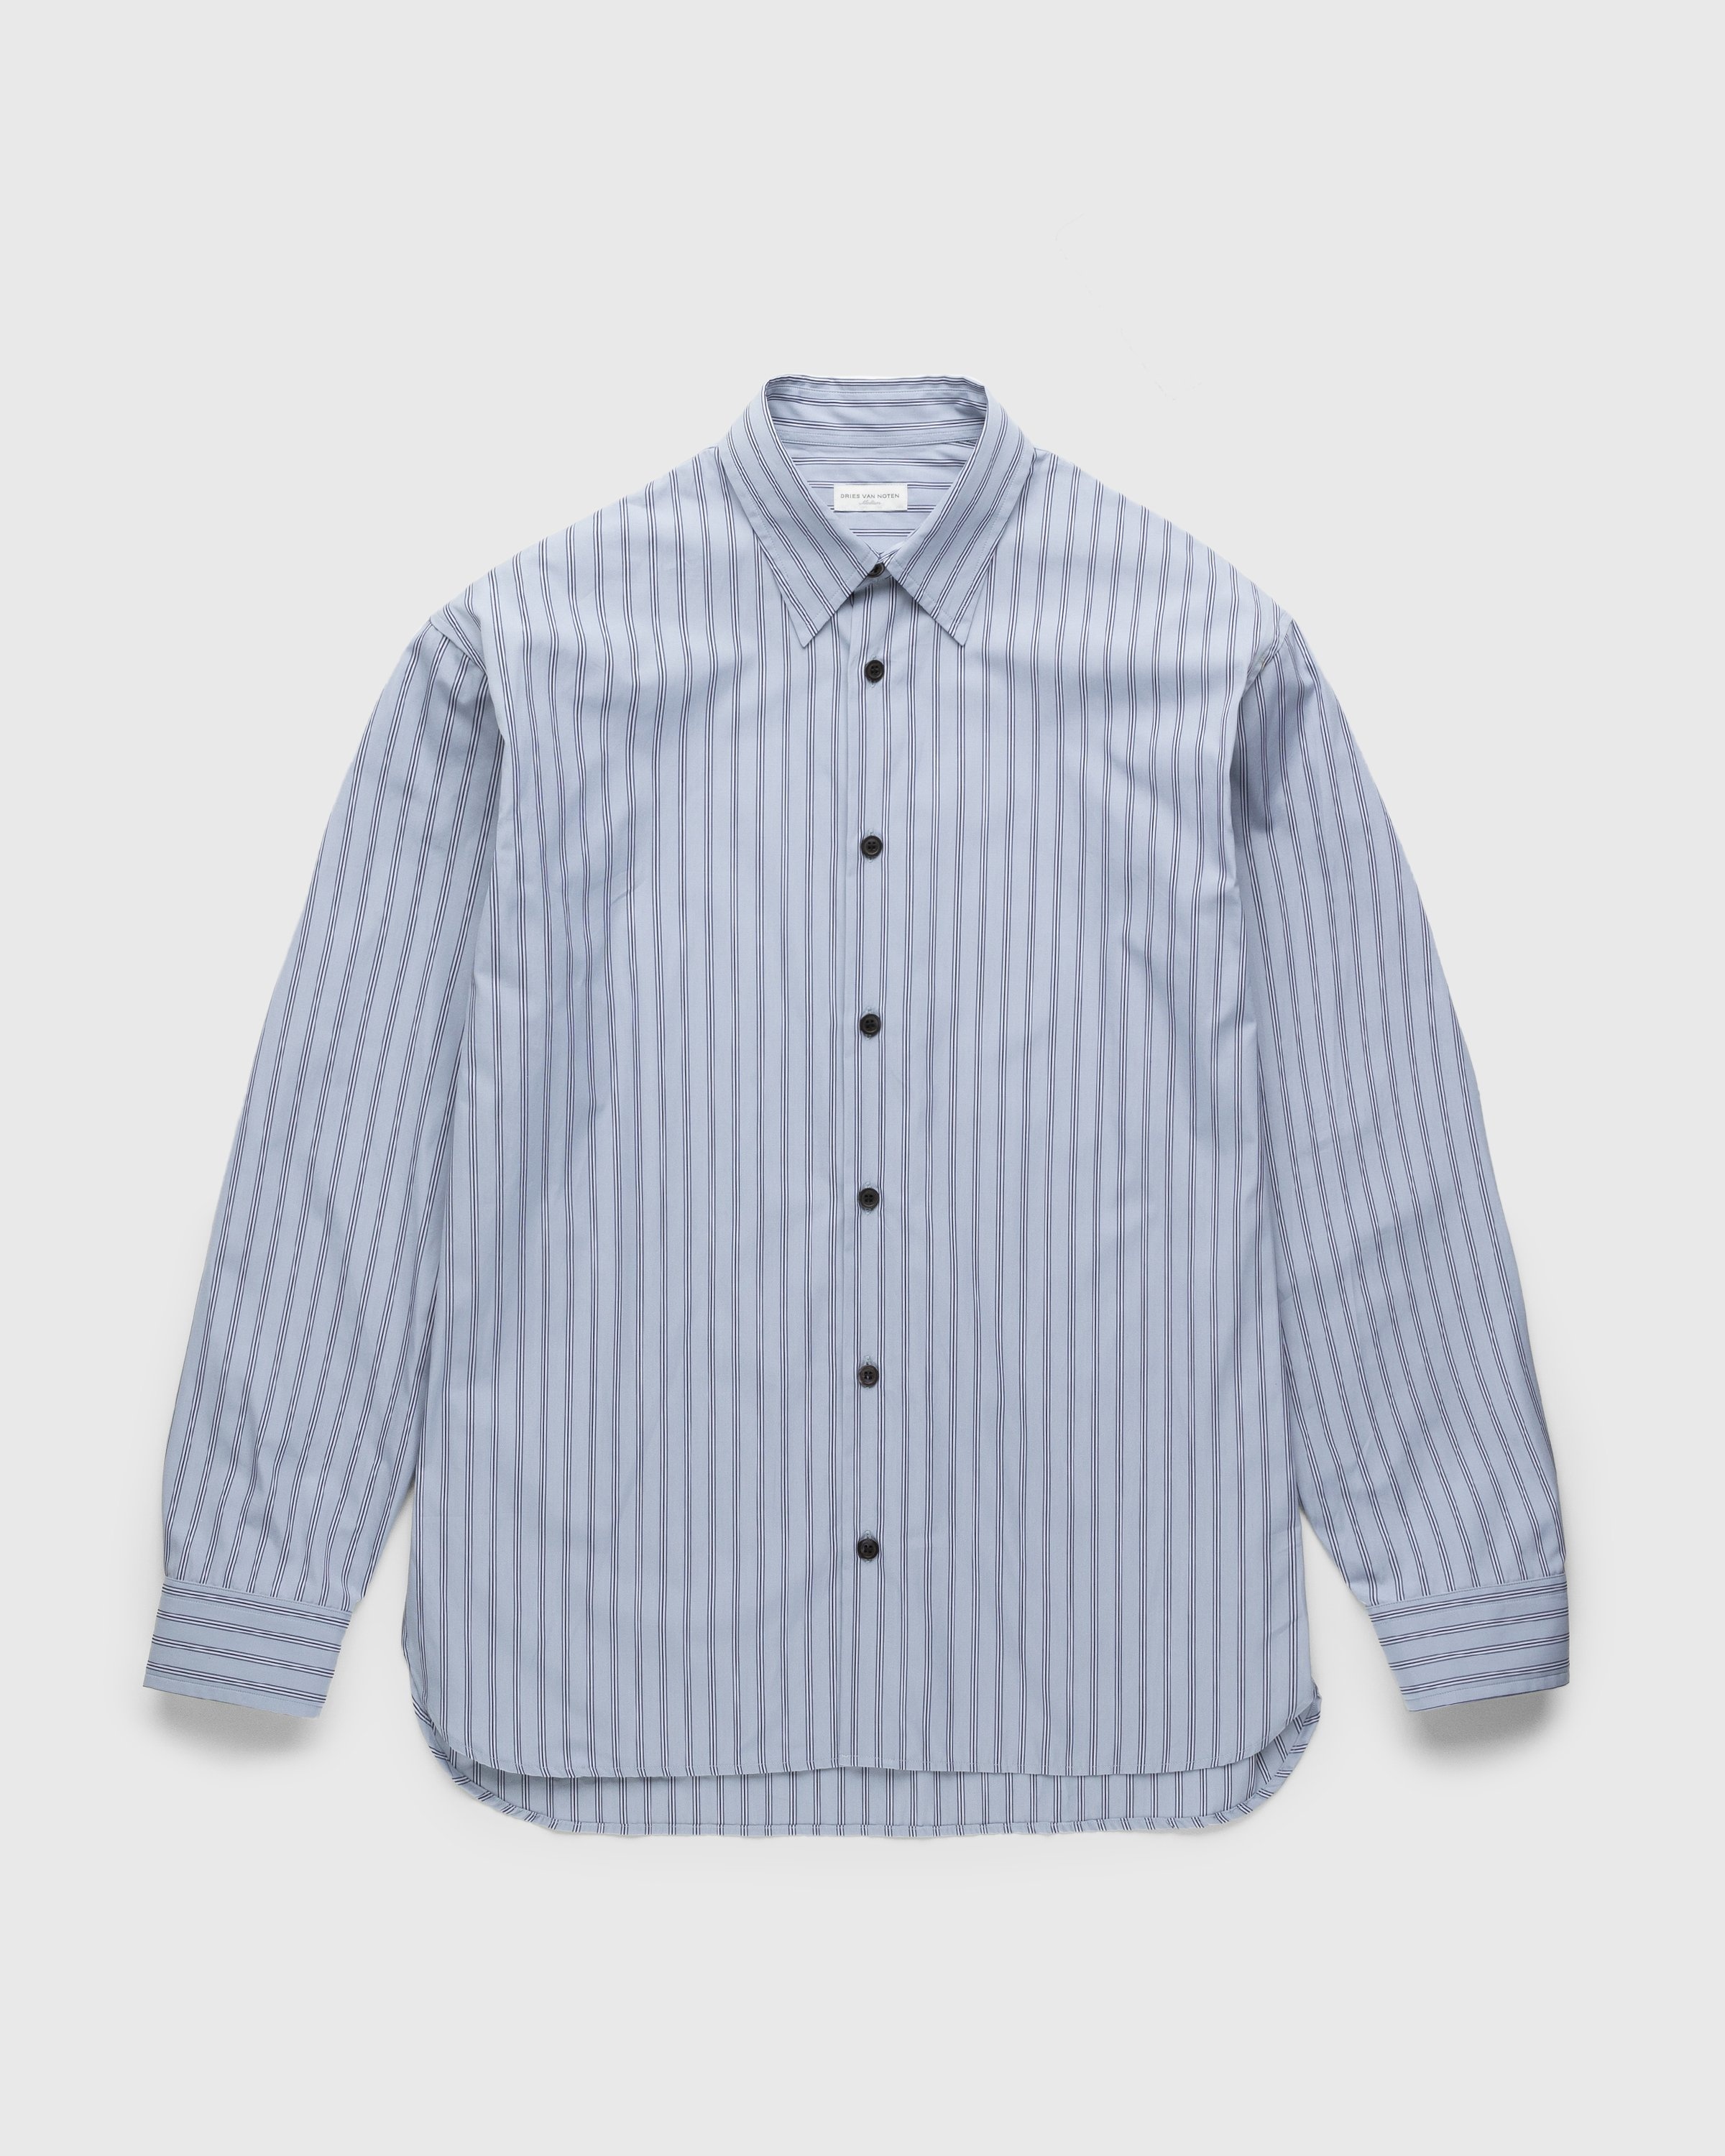 Dries van Noten – Croom Shirt Blue - Shirts - Blue - Image 1